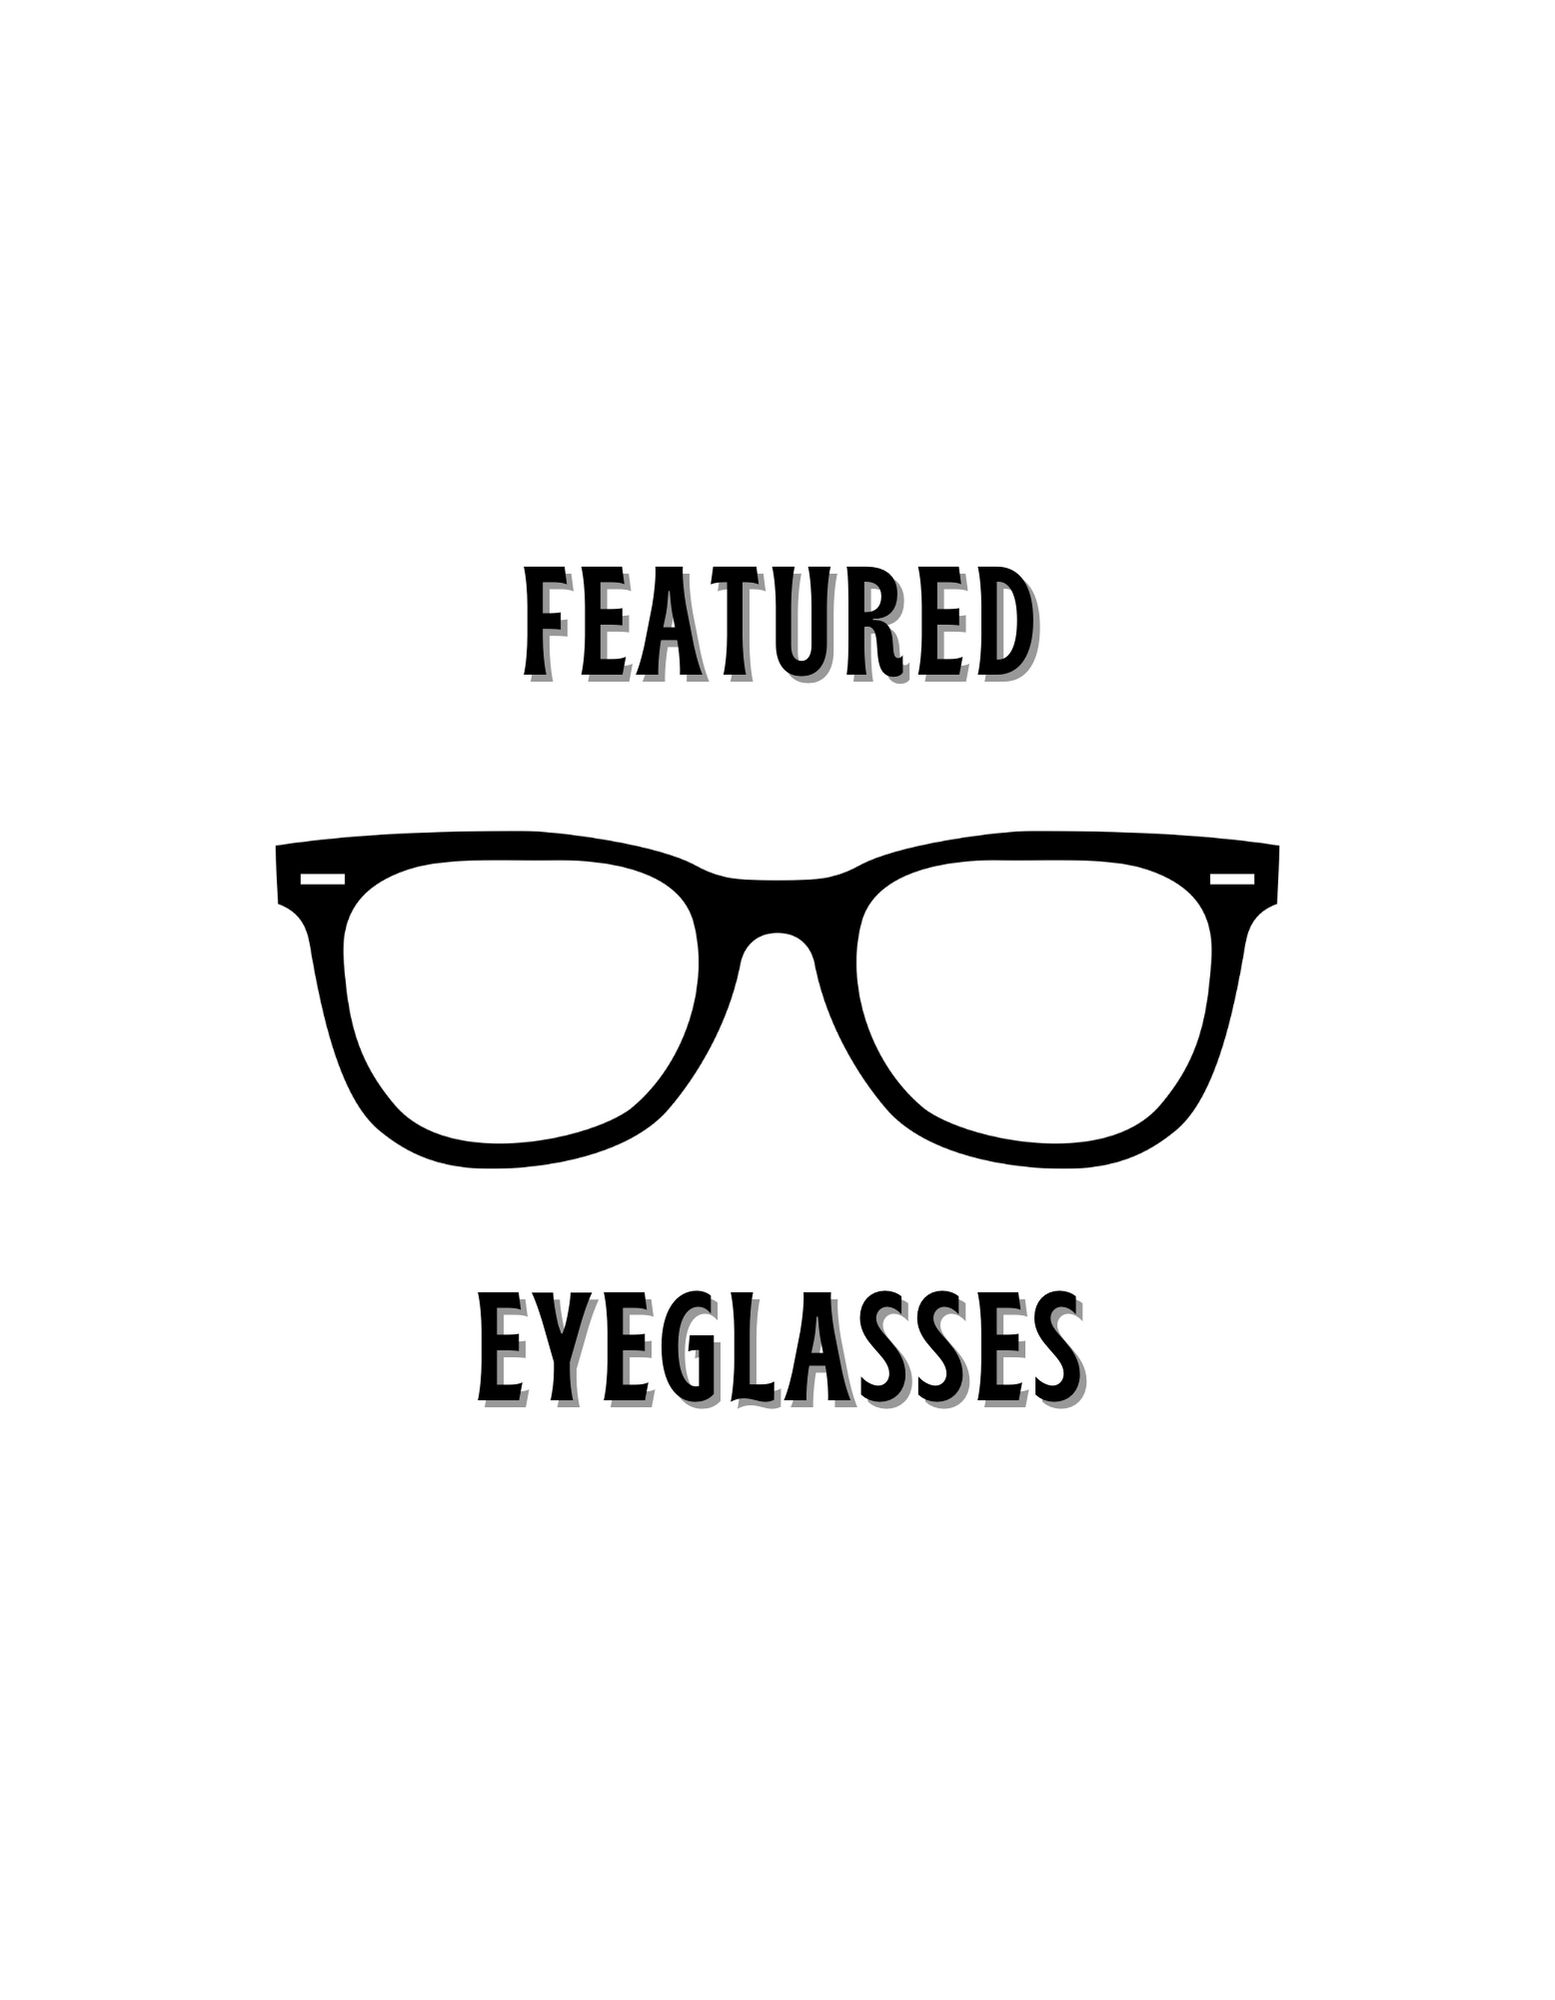 Featured Eyeglasses